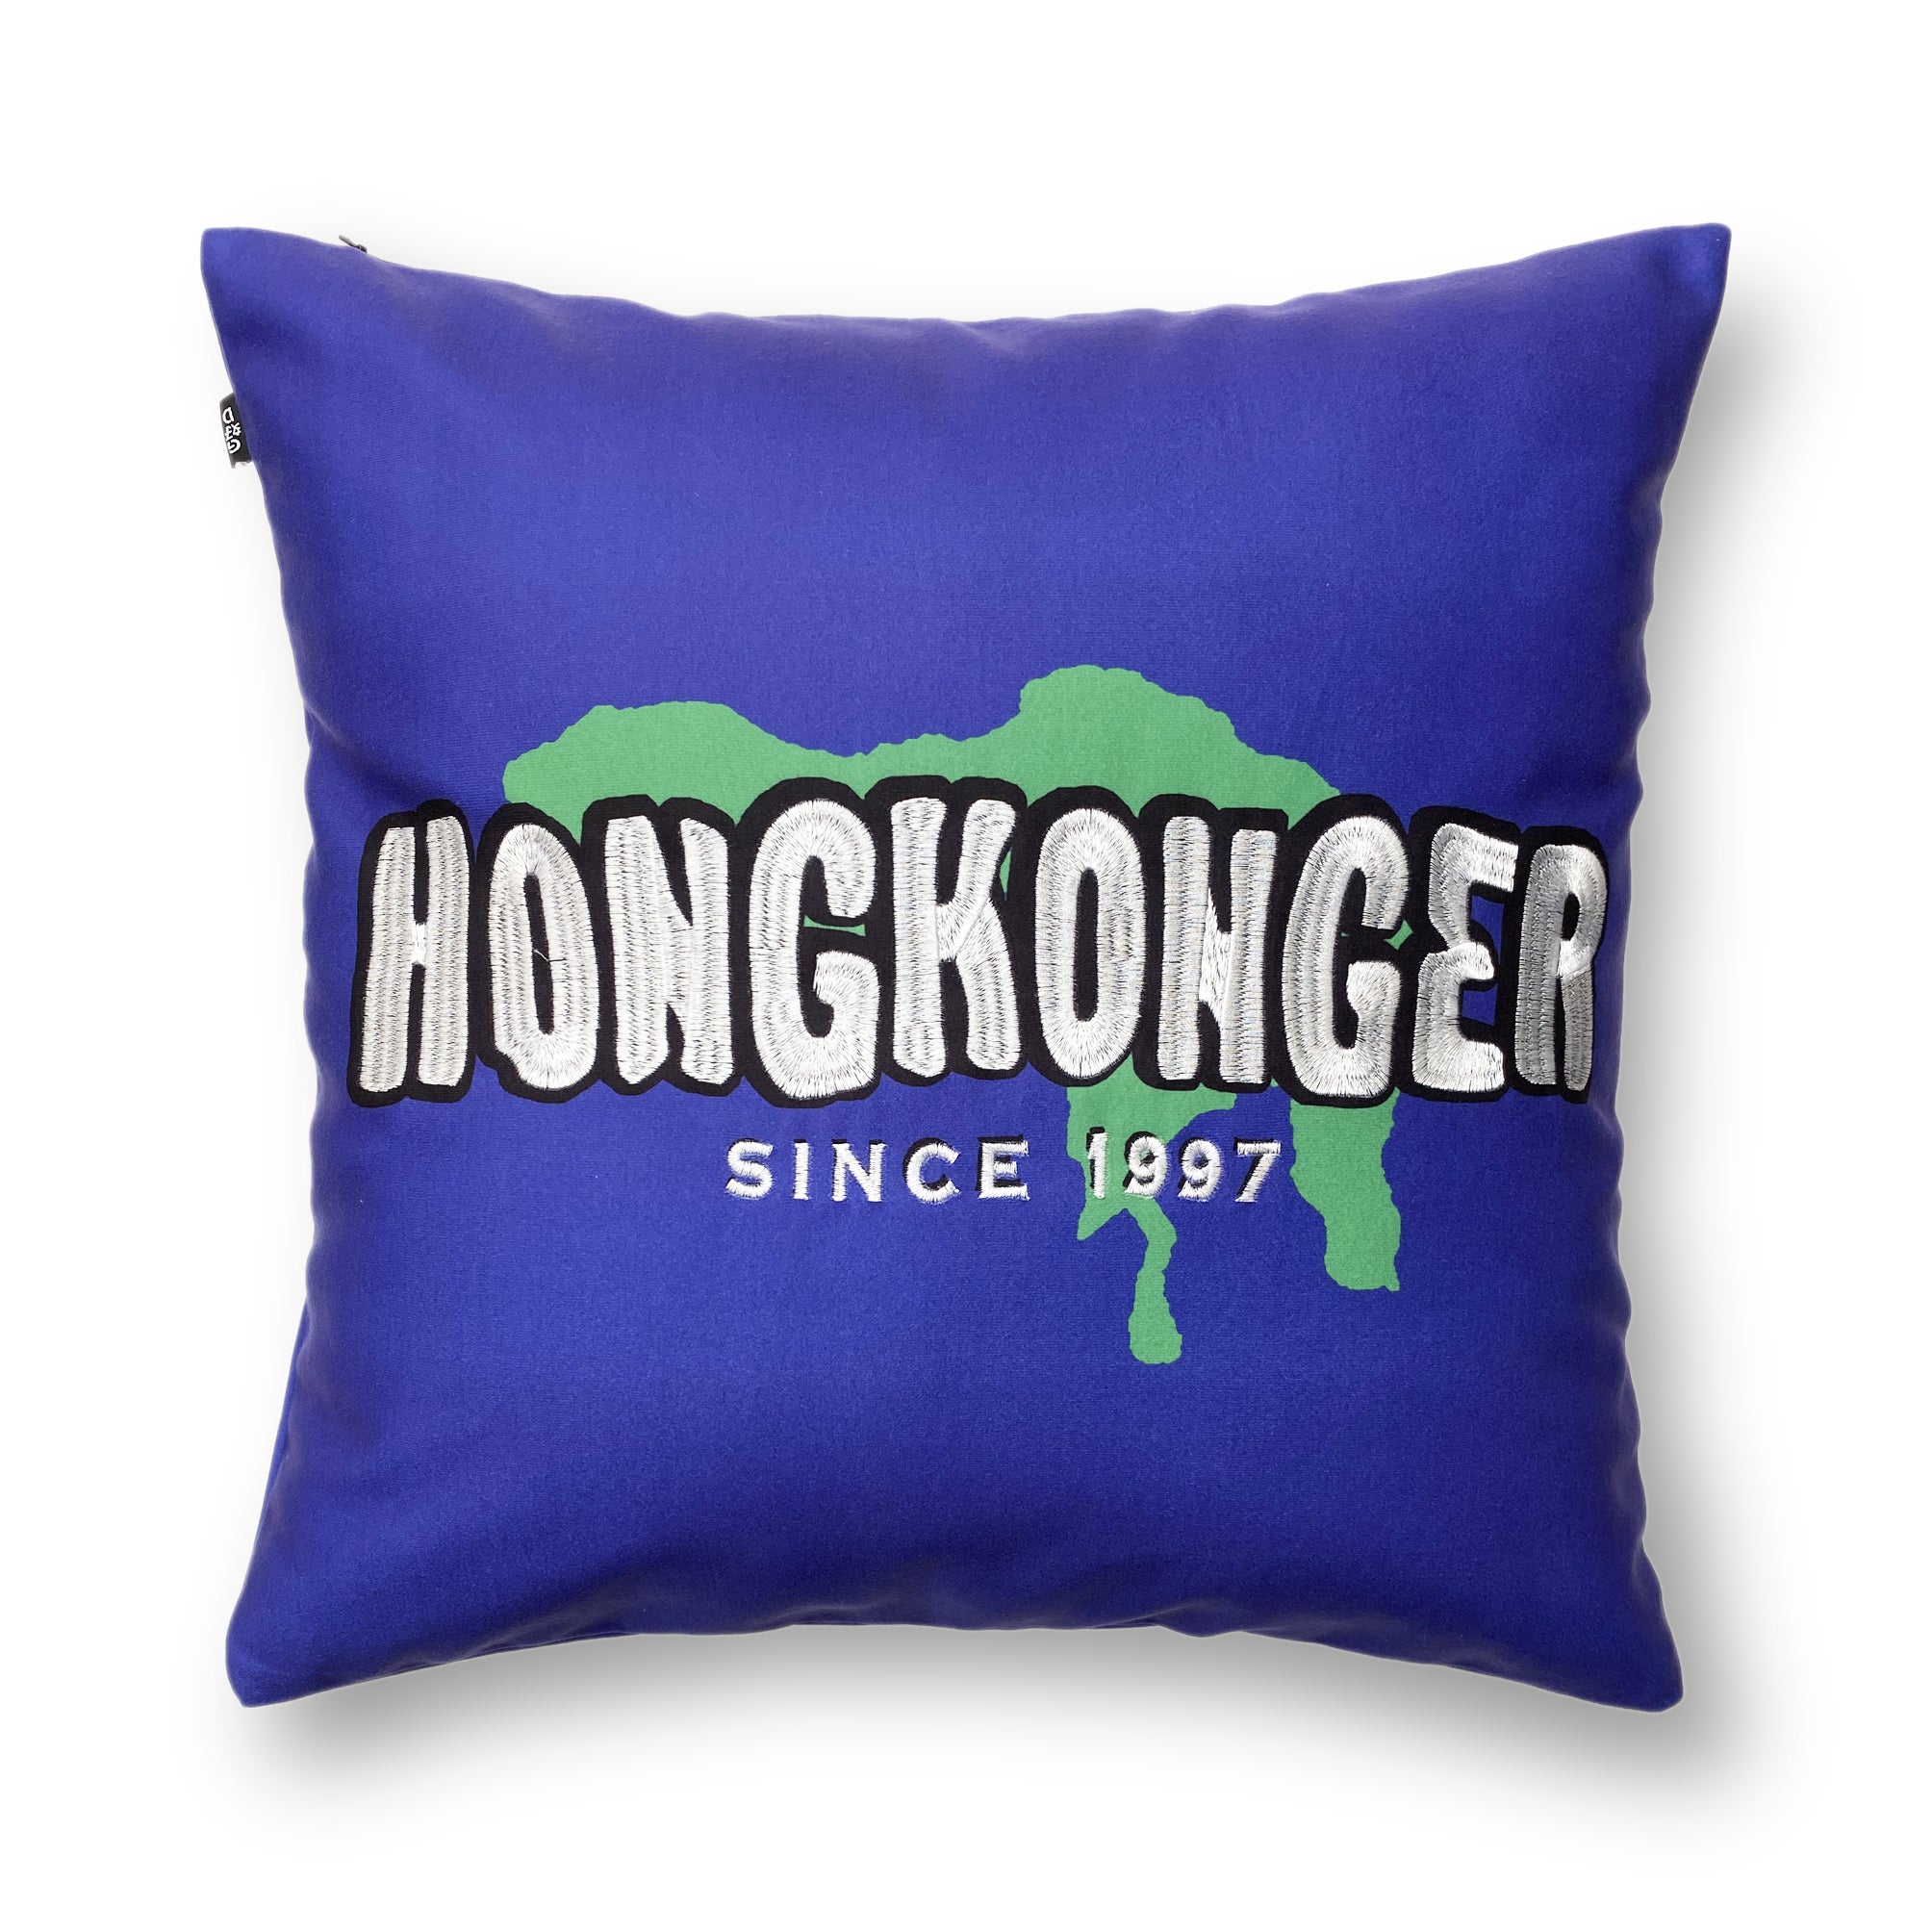 HongKonger Cushion Cover, 45 x 45 cm